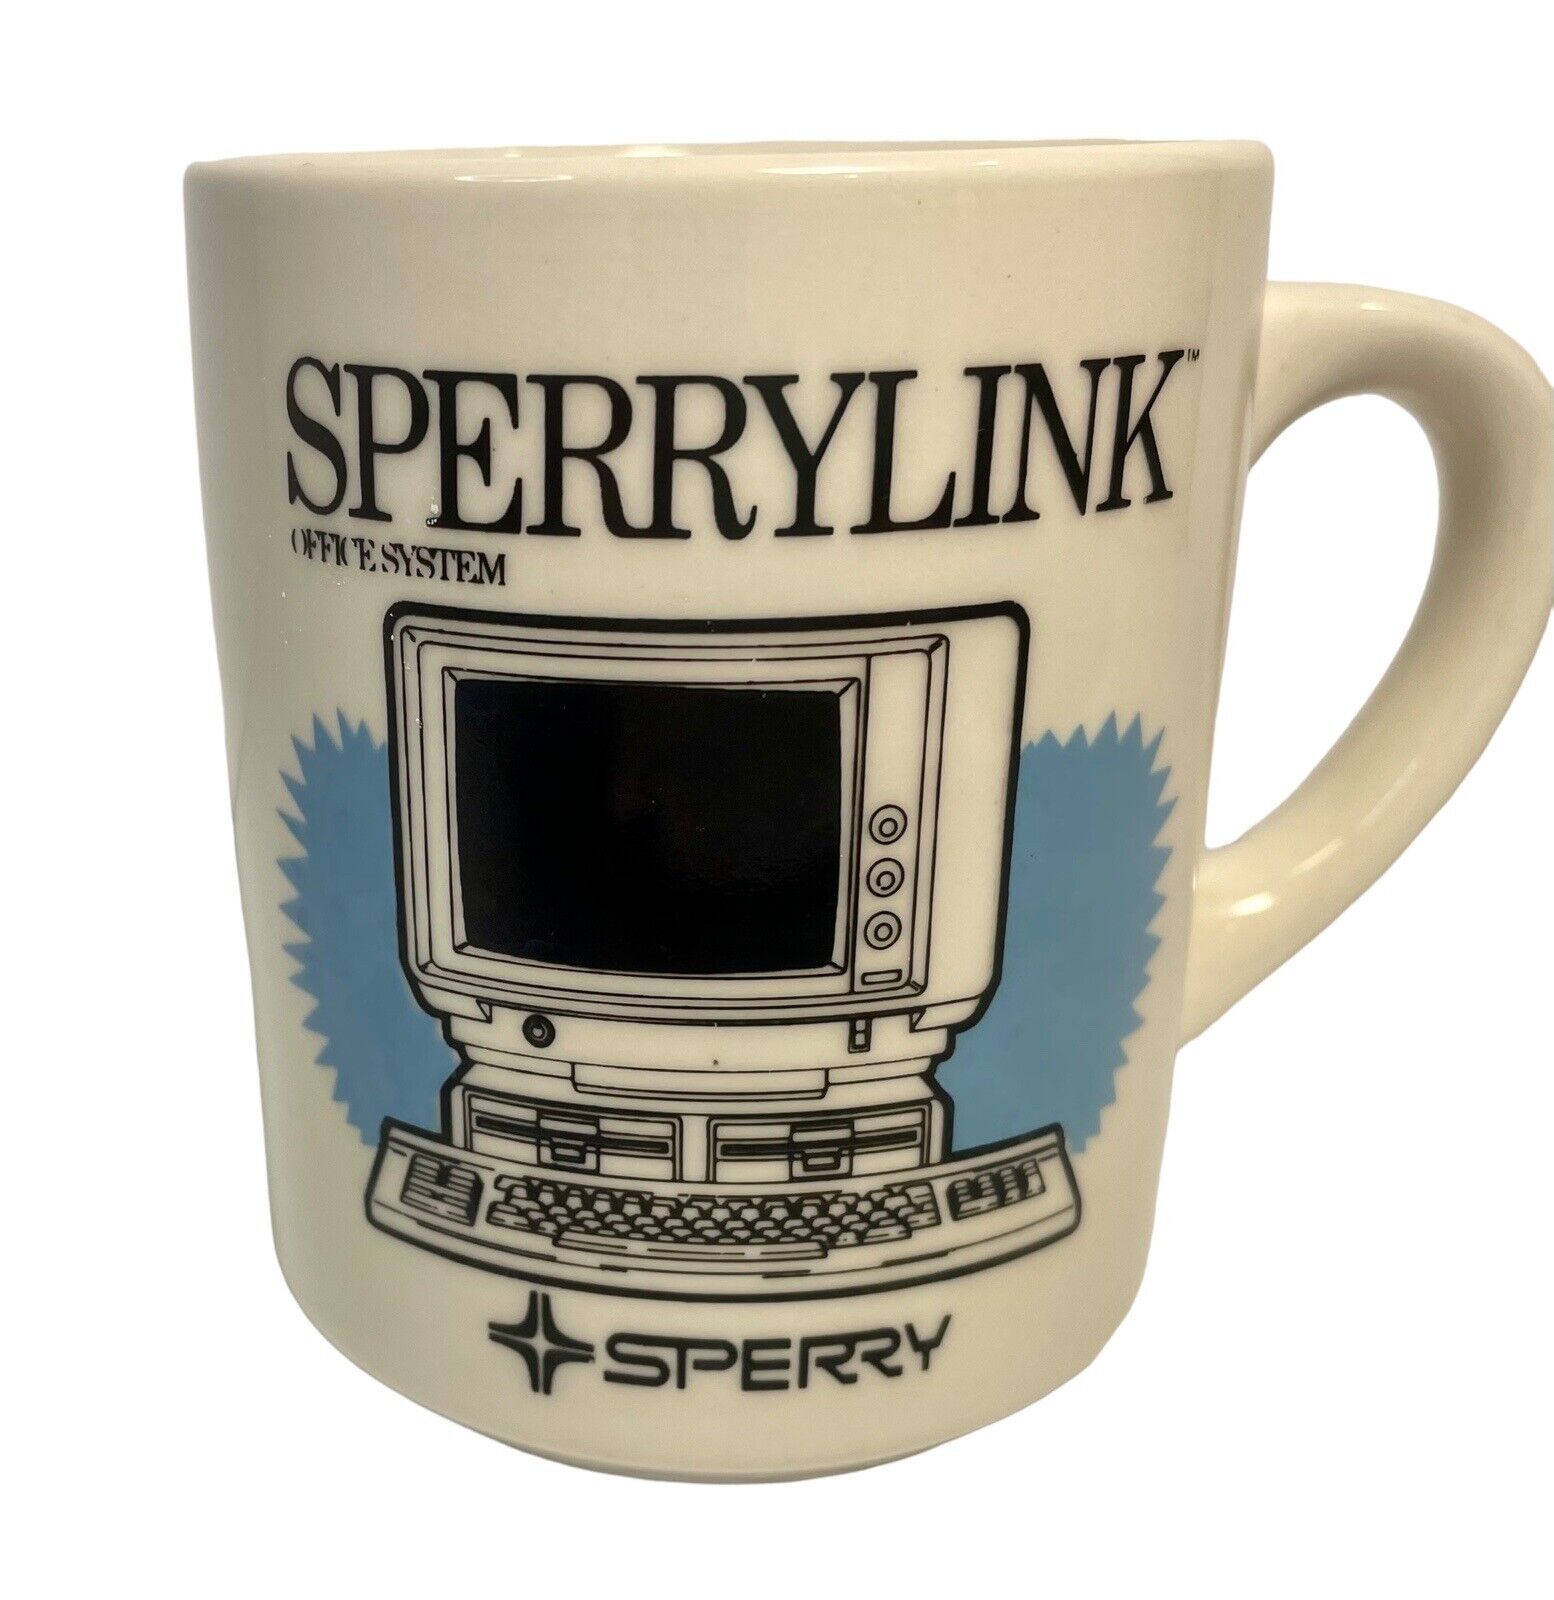 Vintage Sperry Sperrylink Office System Computer 3.5 in Ceramic Blue & White Mug